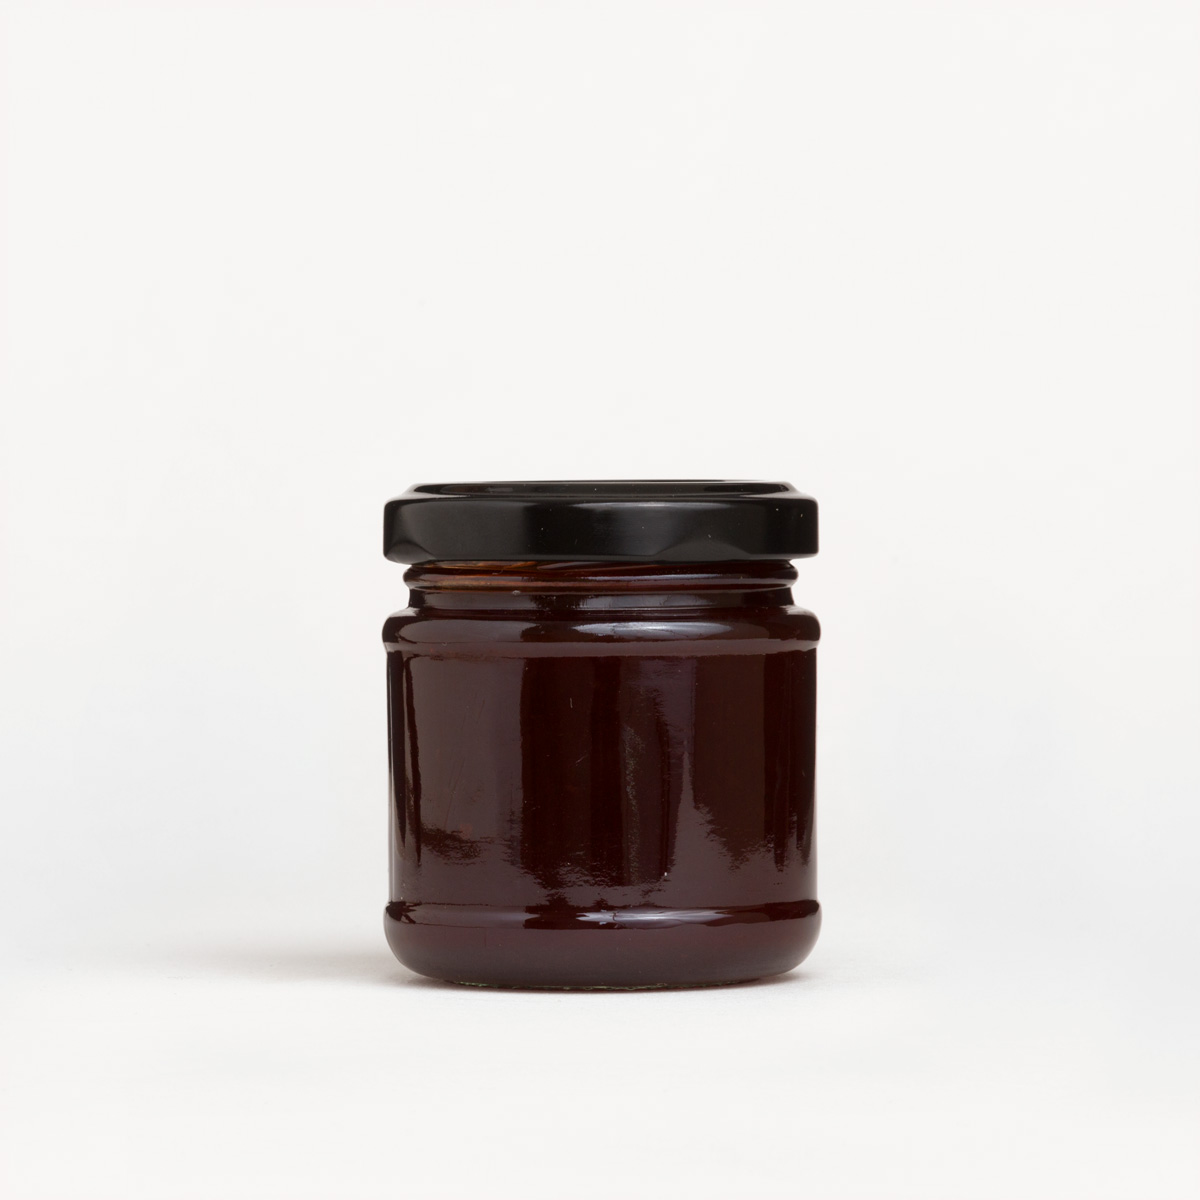 Plum Chilli Paste jar no label